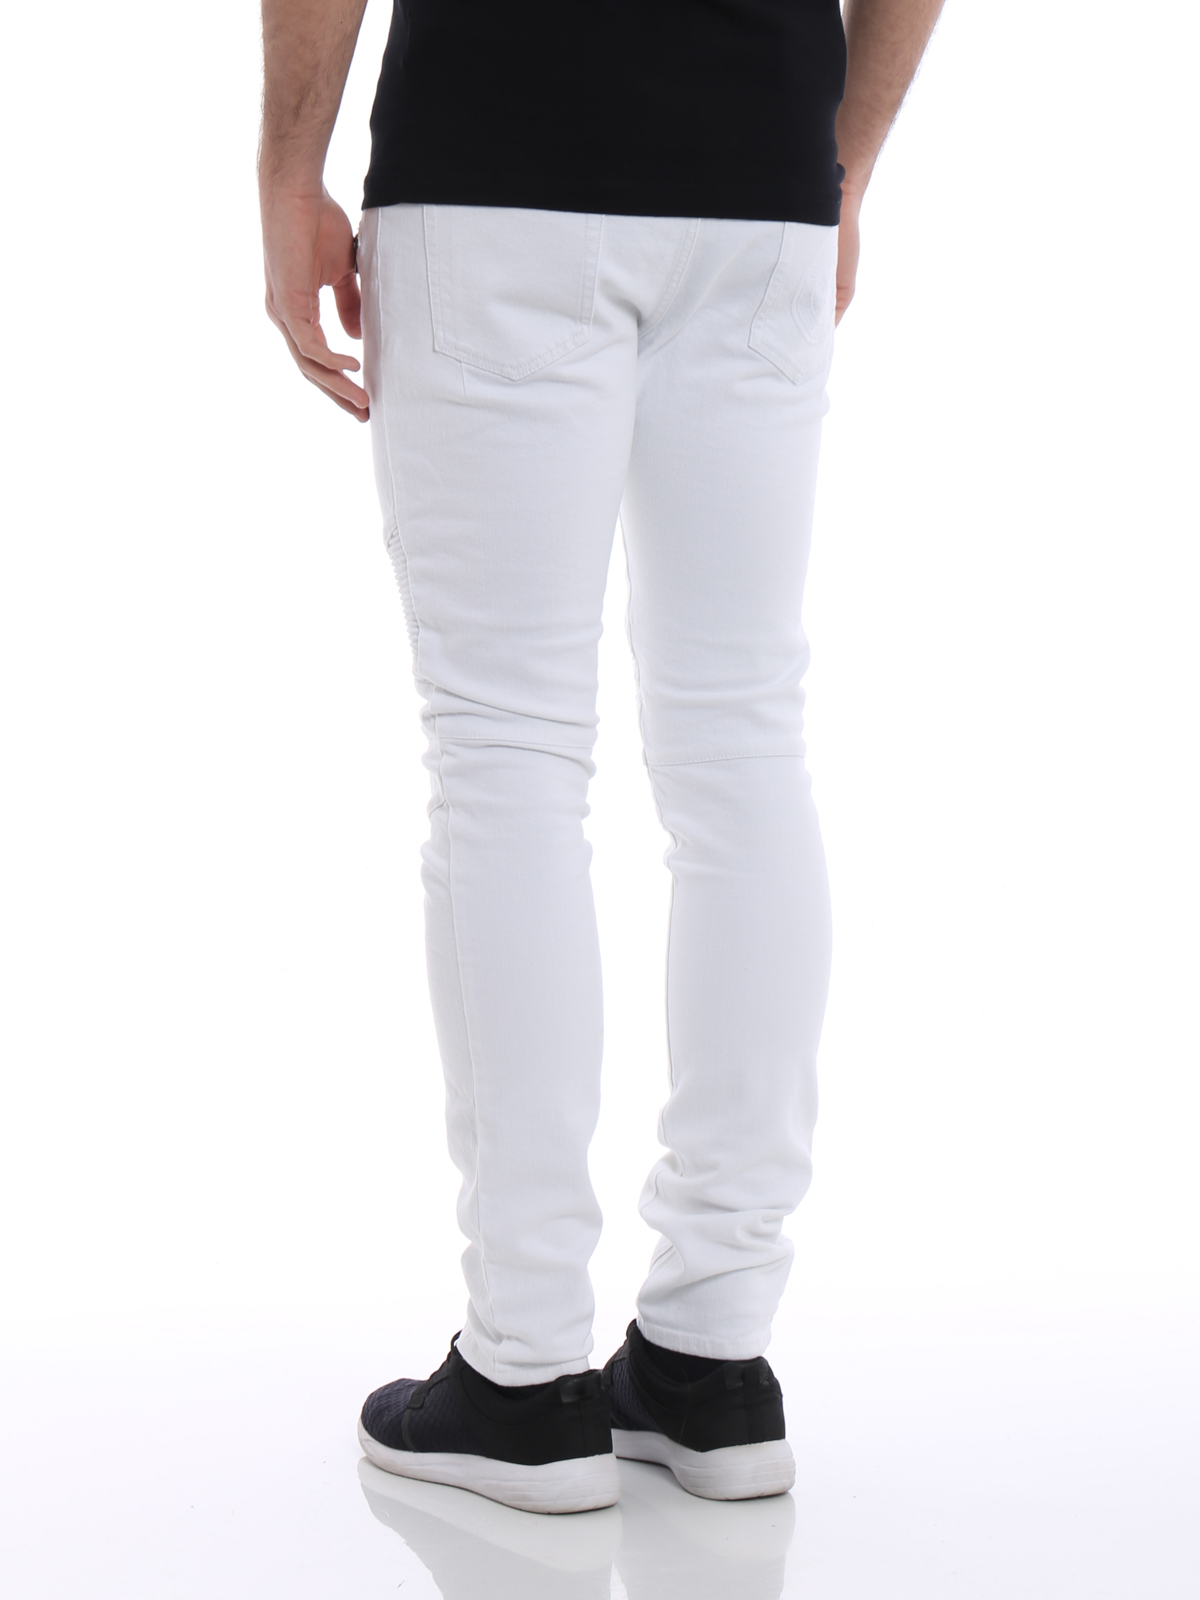 fødselsdag Tropisk repulsion Skinny jeans Balmain - White denim biker jeans - S8H9131T138100